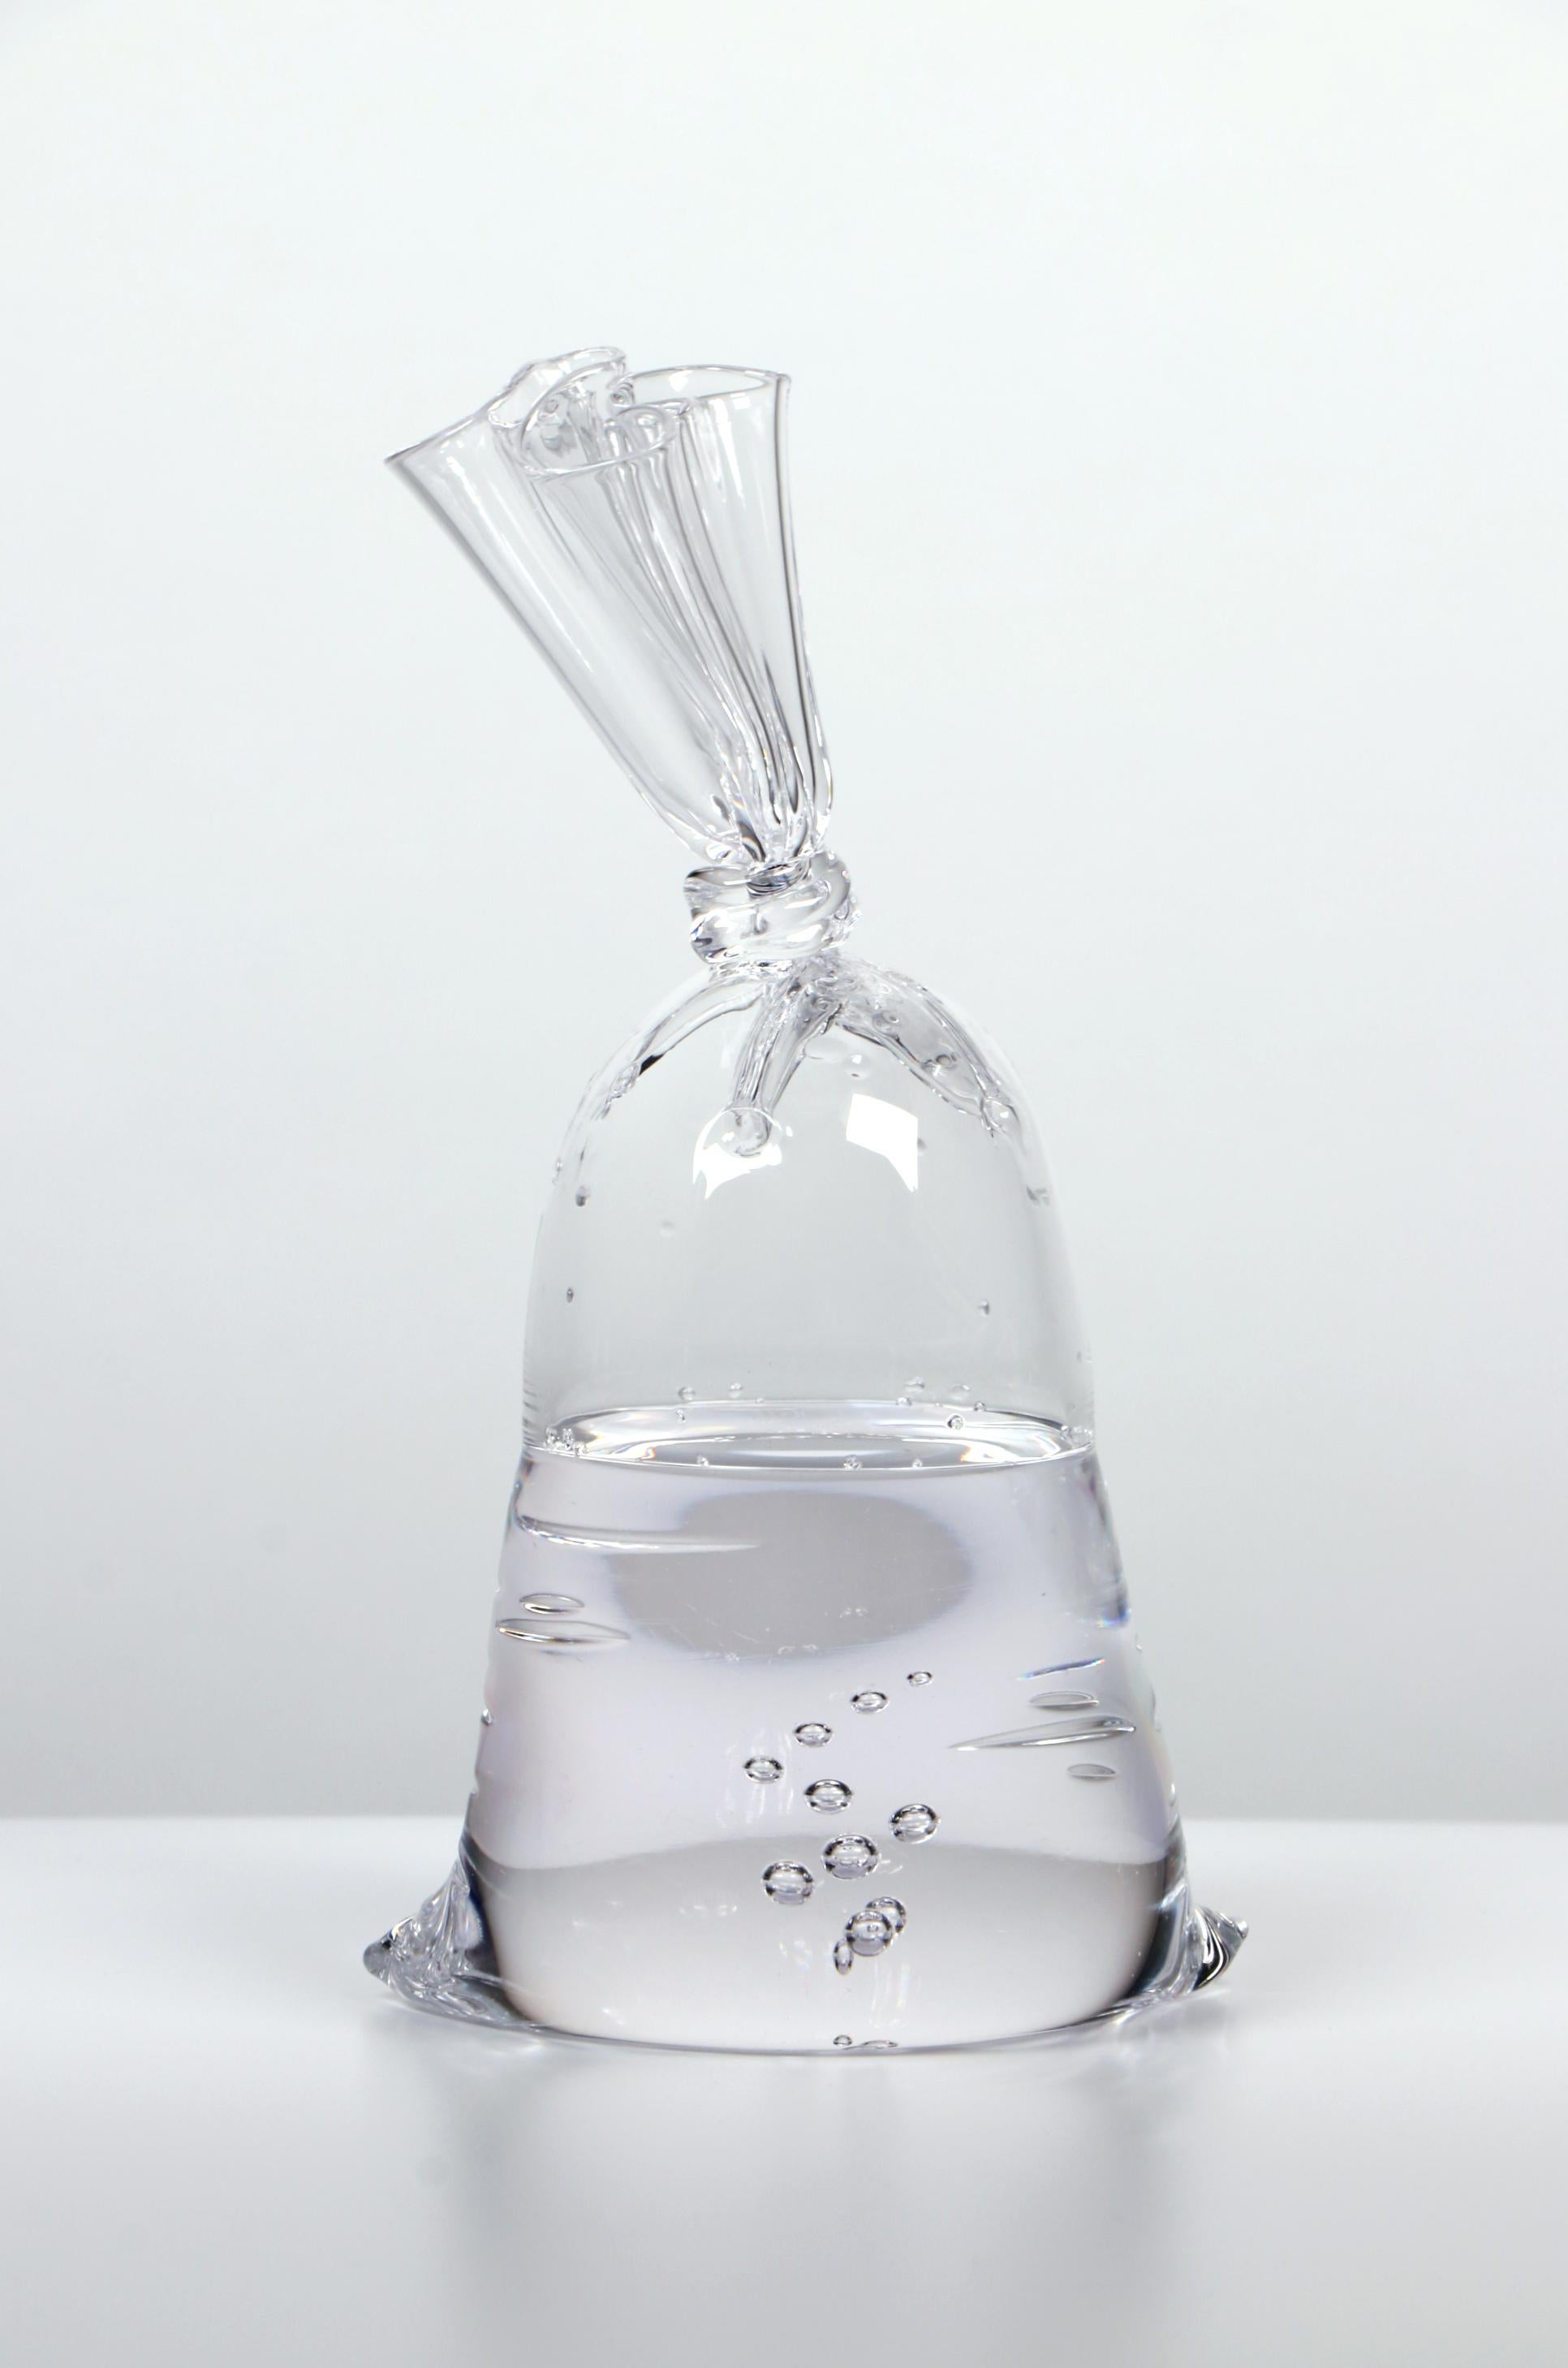 Mini Glass Water Bag - Hyperreal glass sculpture - Sculpture by Dylan Martinez